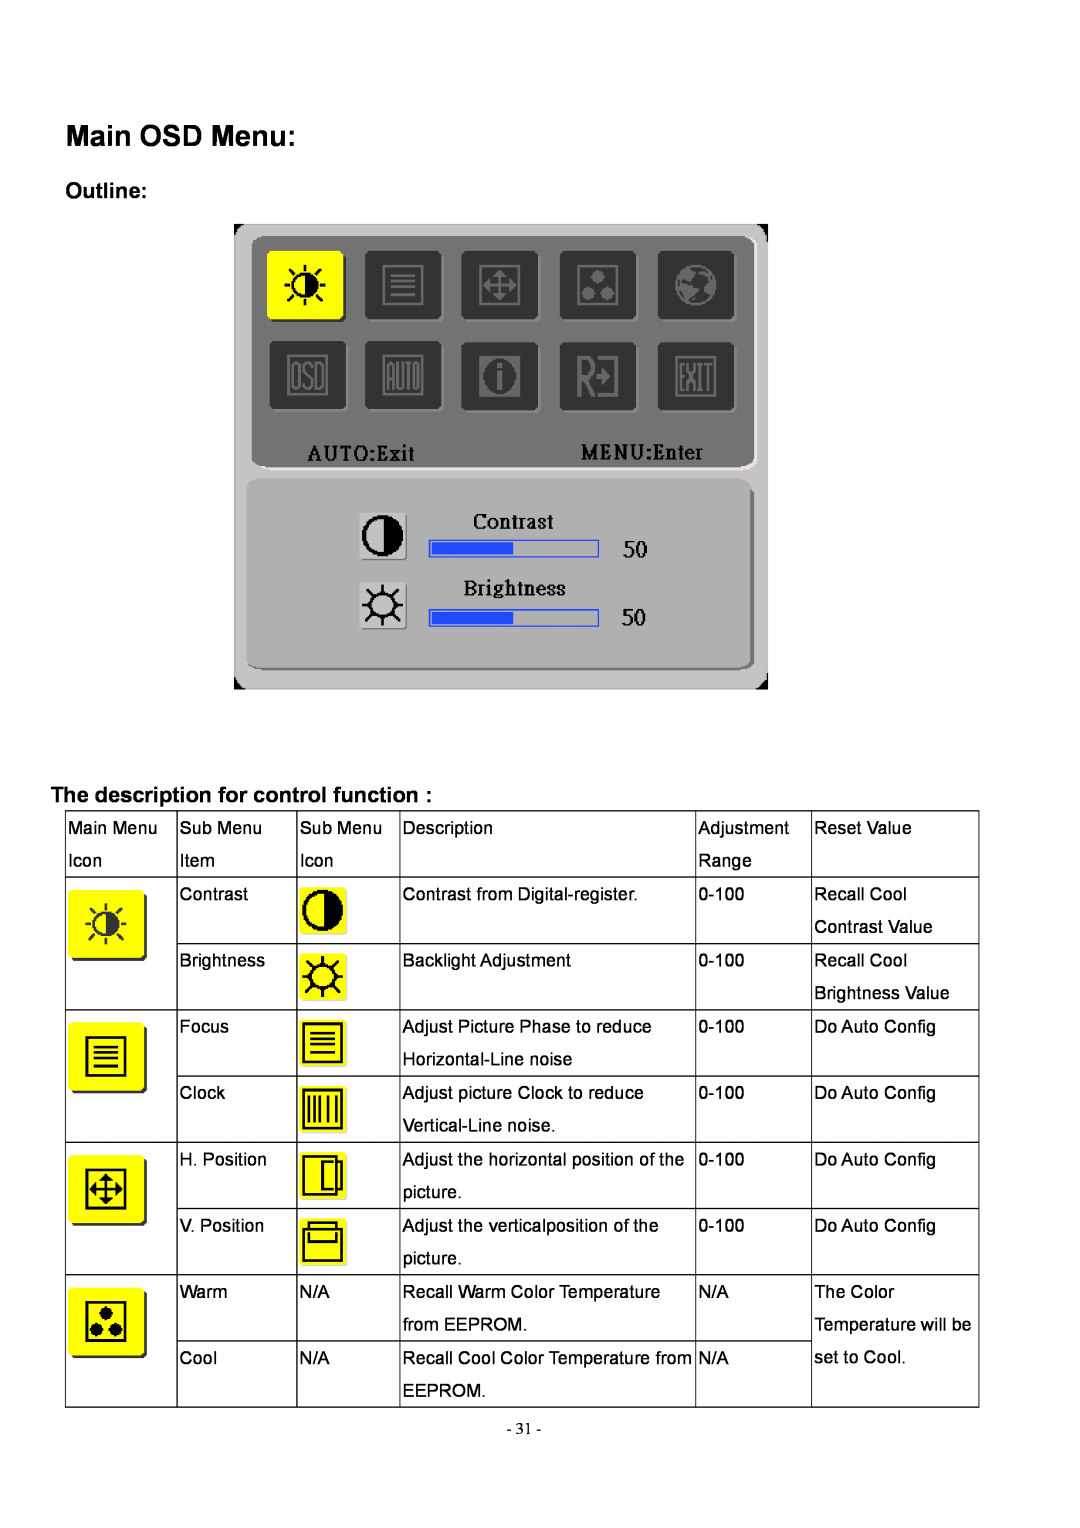 Acer AL1912 manual Main OSD Menu, Outline The description for control function 